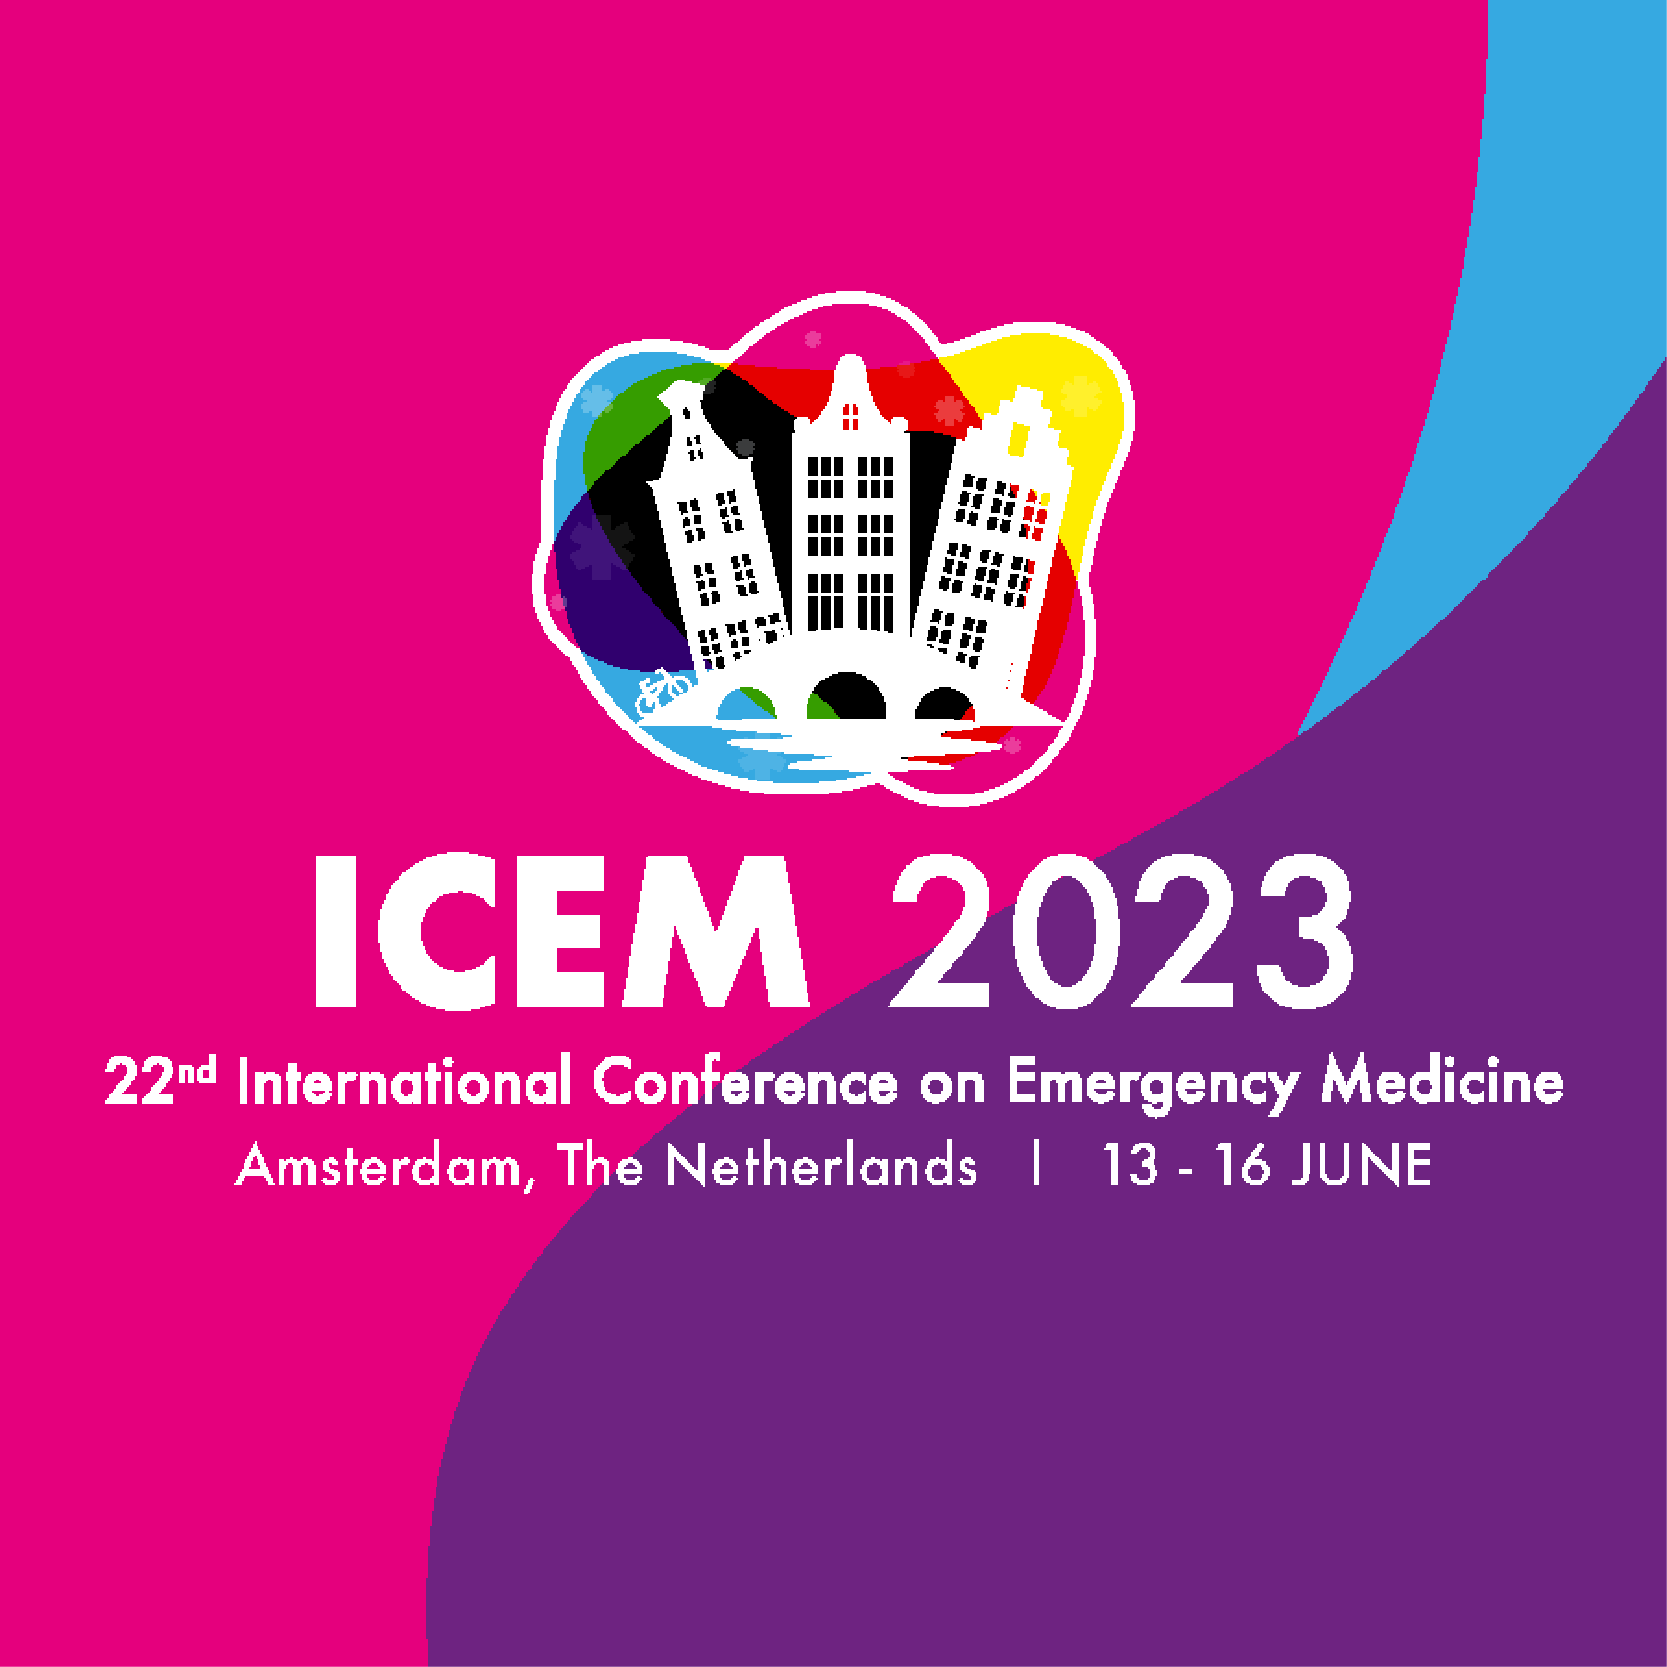 Medflixs 22nd International Conference on Emergency Medicine ICEM 2023